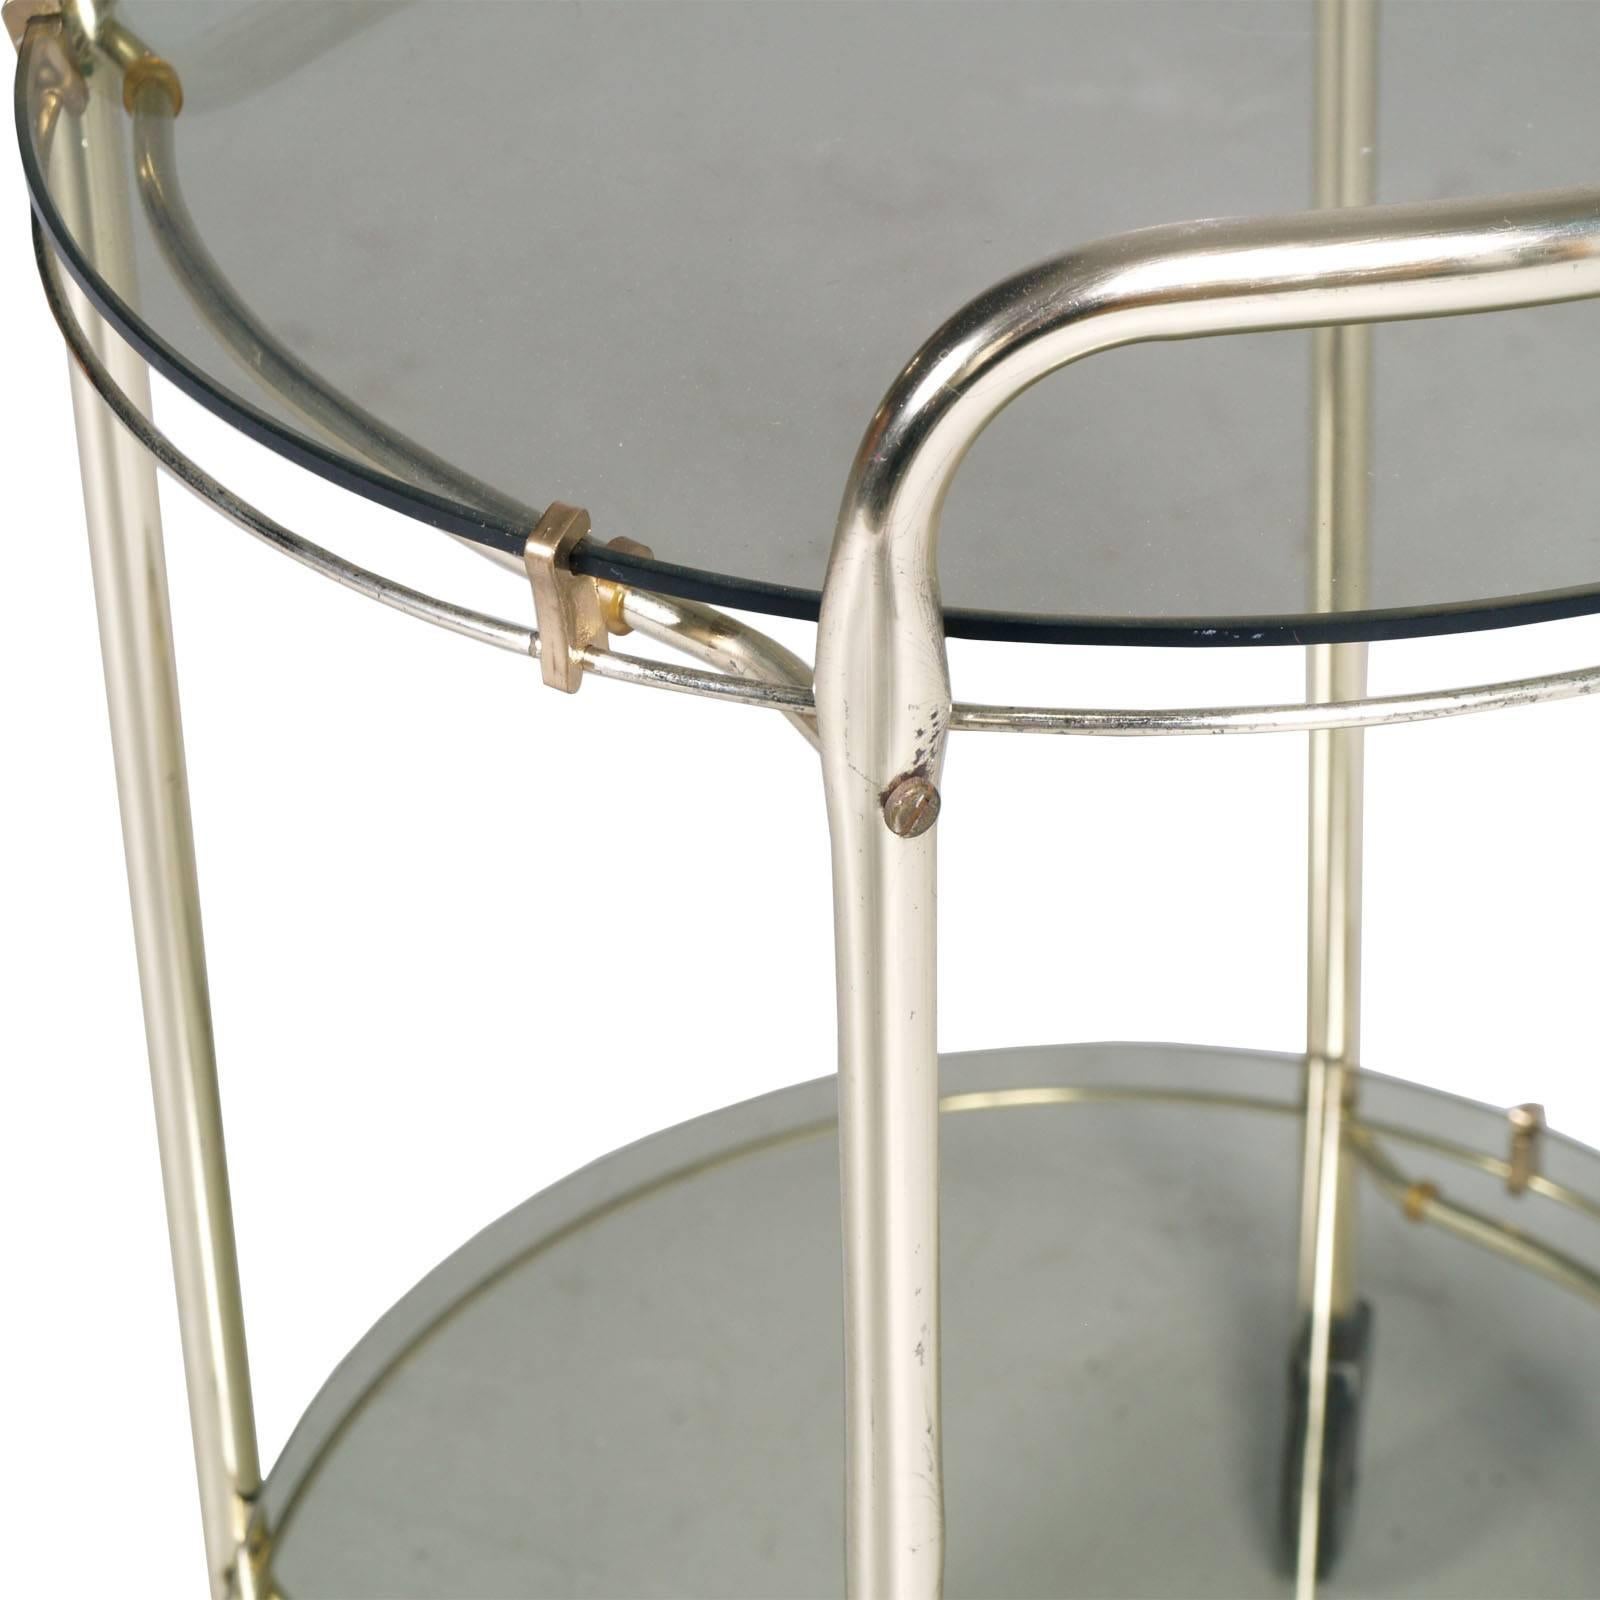 Italian elegant Mid-Century Modern bar cart in brass and smoked crystal 

Measures cm: H63 diameter. 45 (H internal shelf 40 cm).